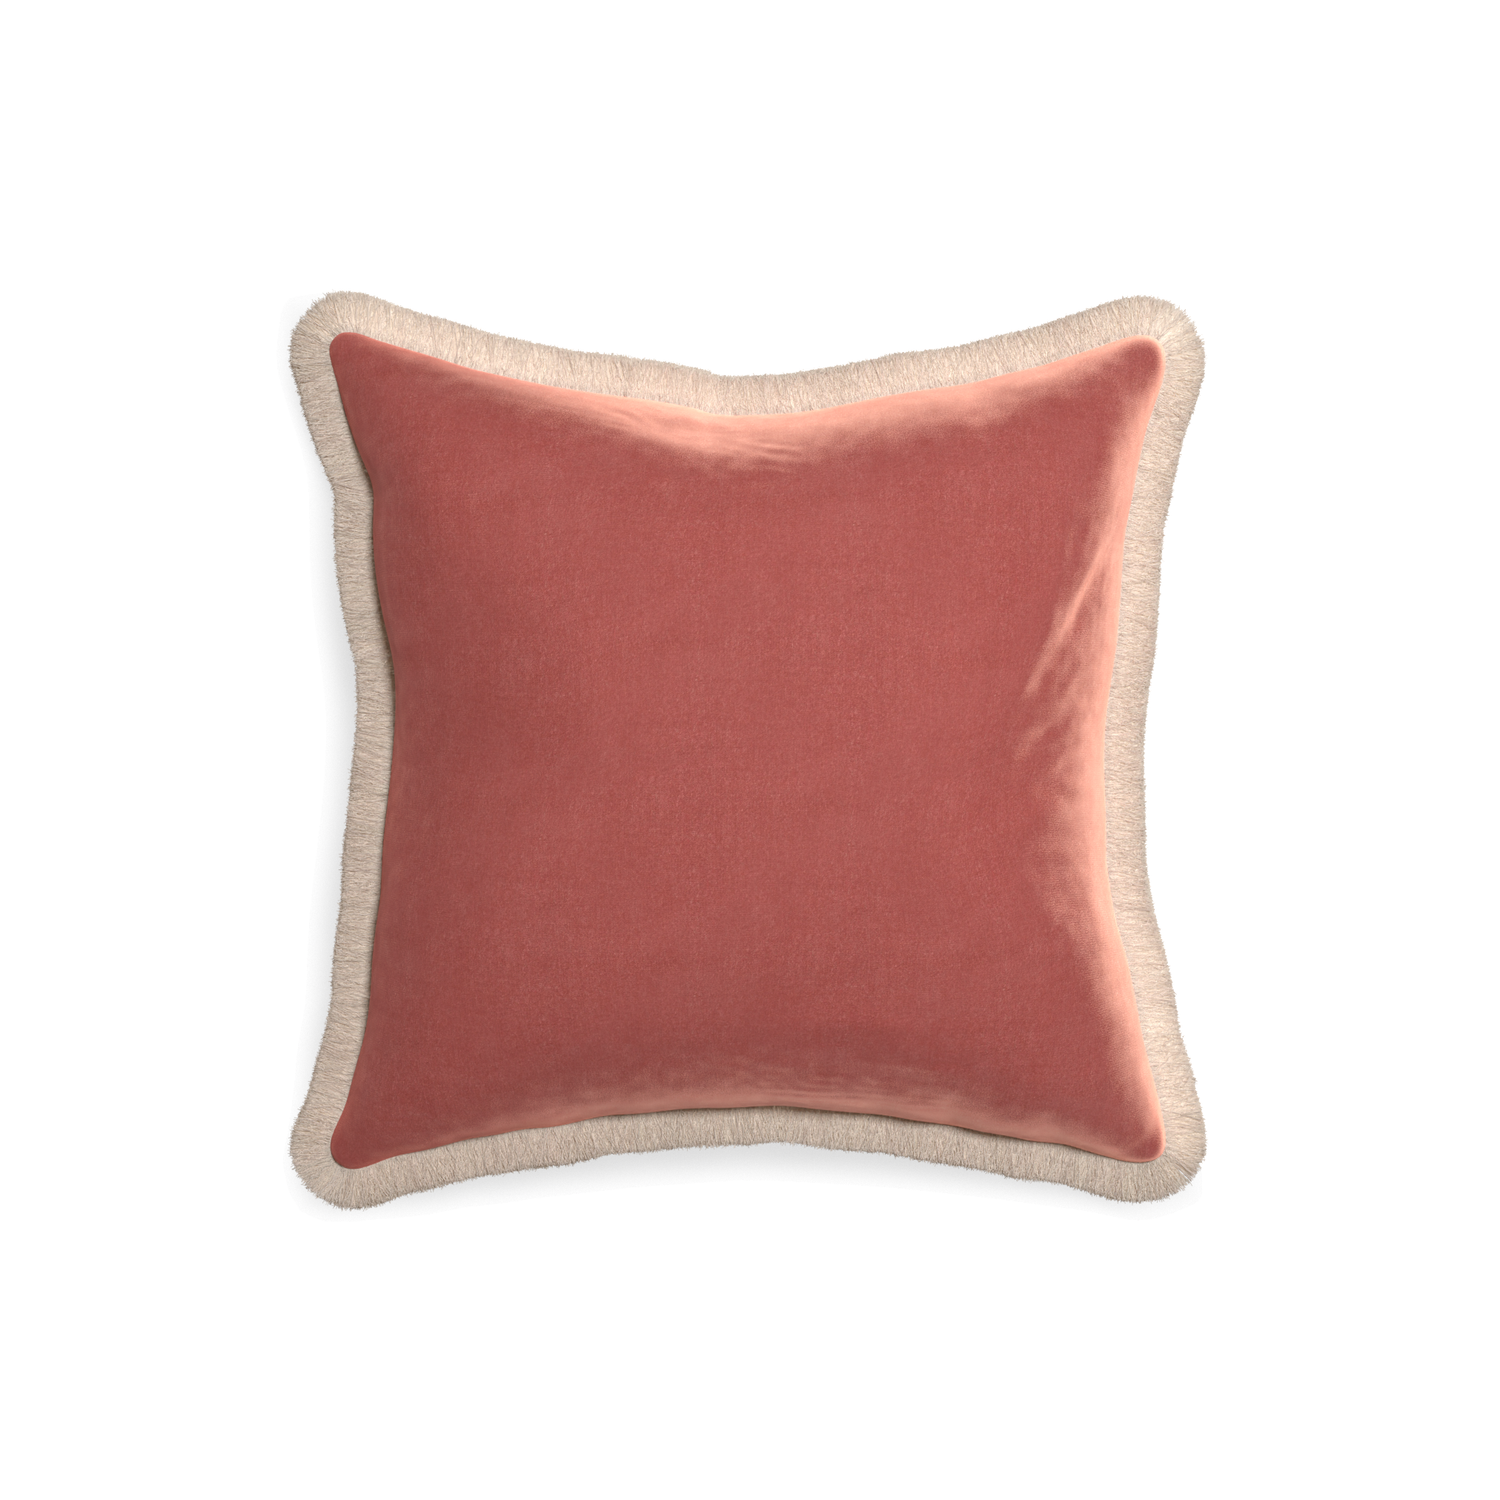 square coral velvet pillow with cream fringe